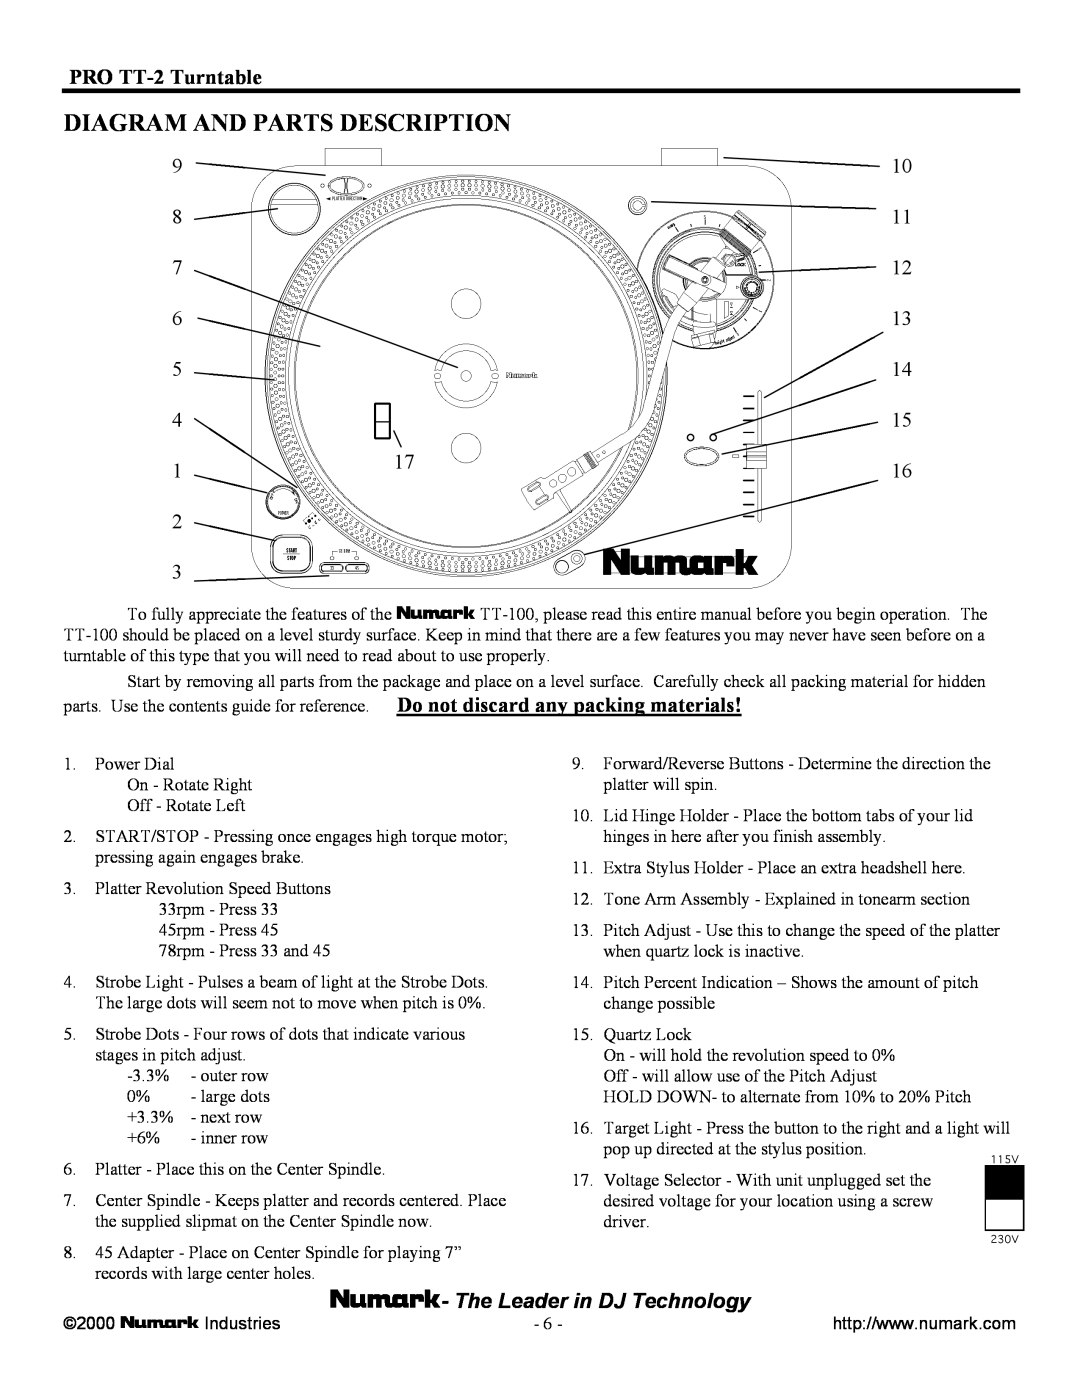 Numark Industries TT-100 owner manual Diagram And Parts Description, PRO TT-2Turntable, The Leader in DJ Technology 